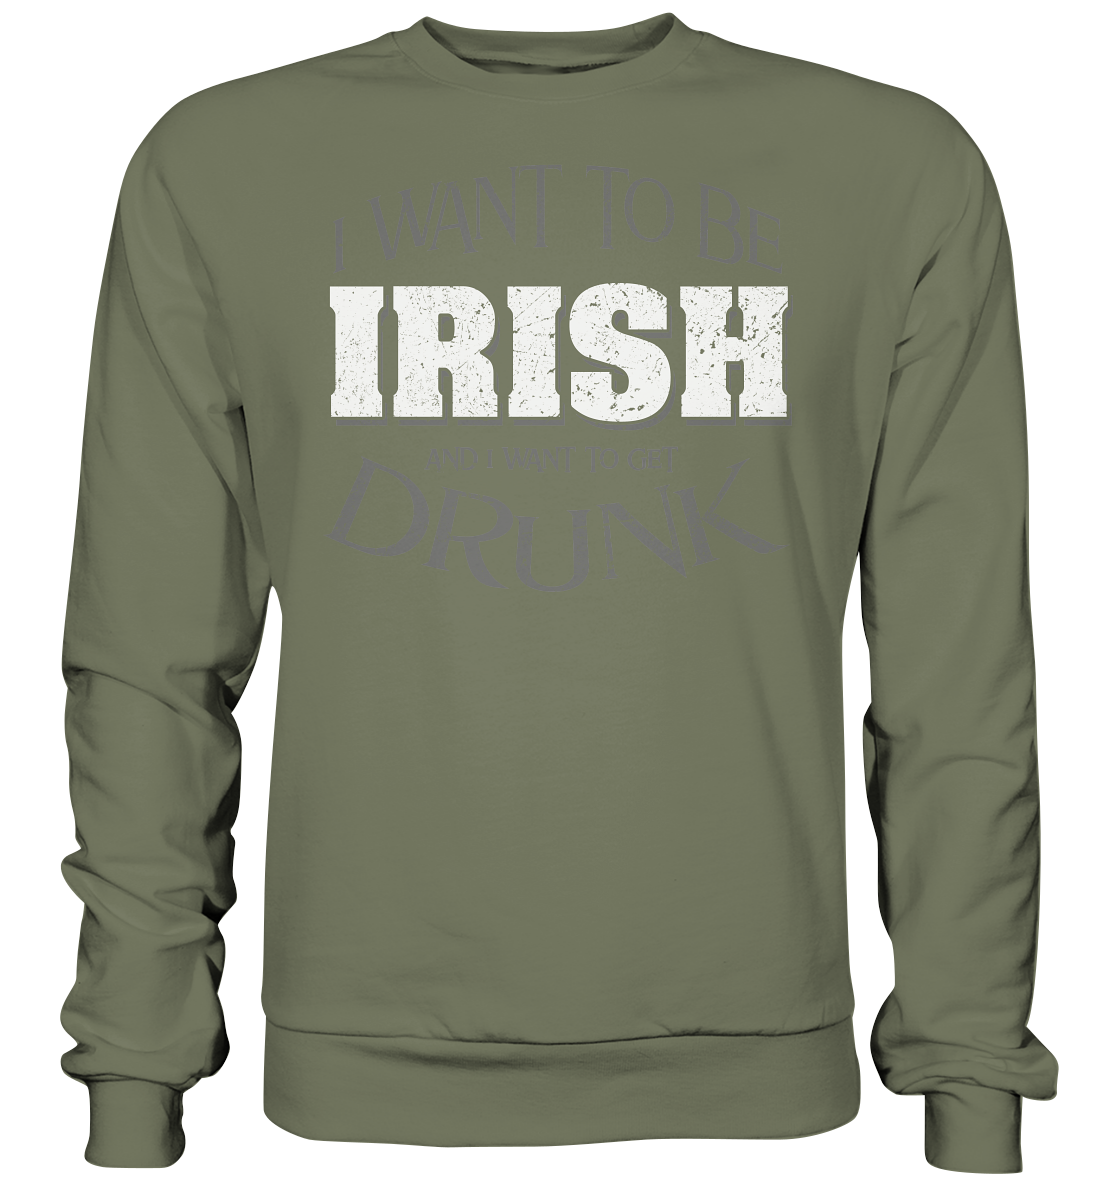 I Want To Be Irish And I Want To Get Drunk - Premium Sweatshirt